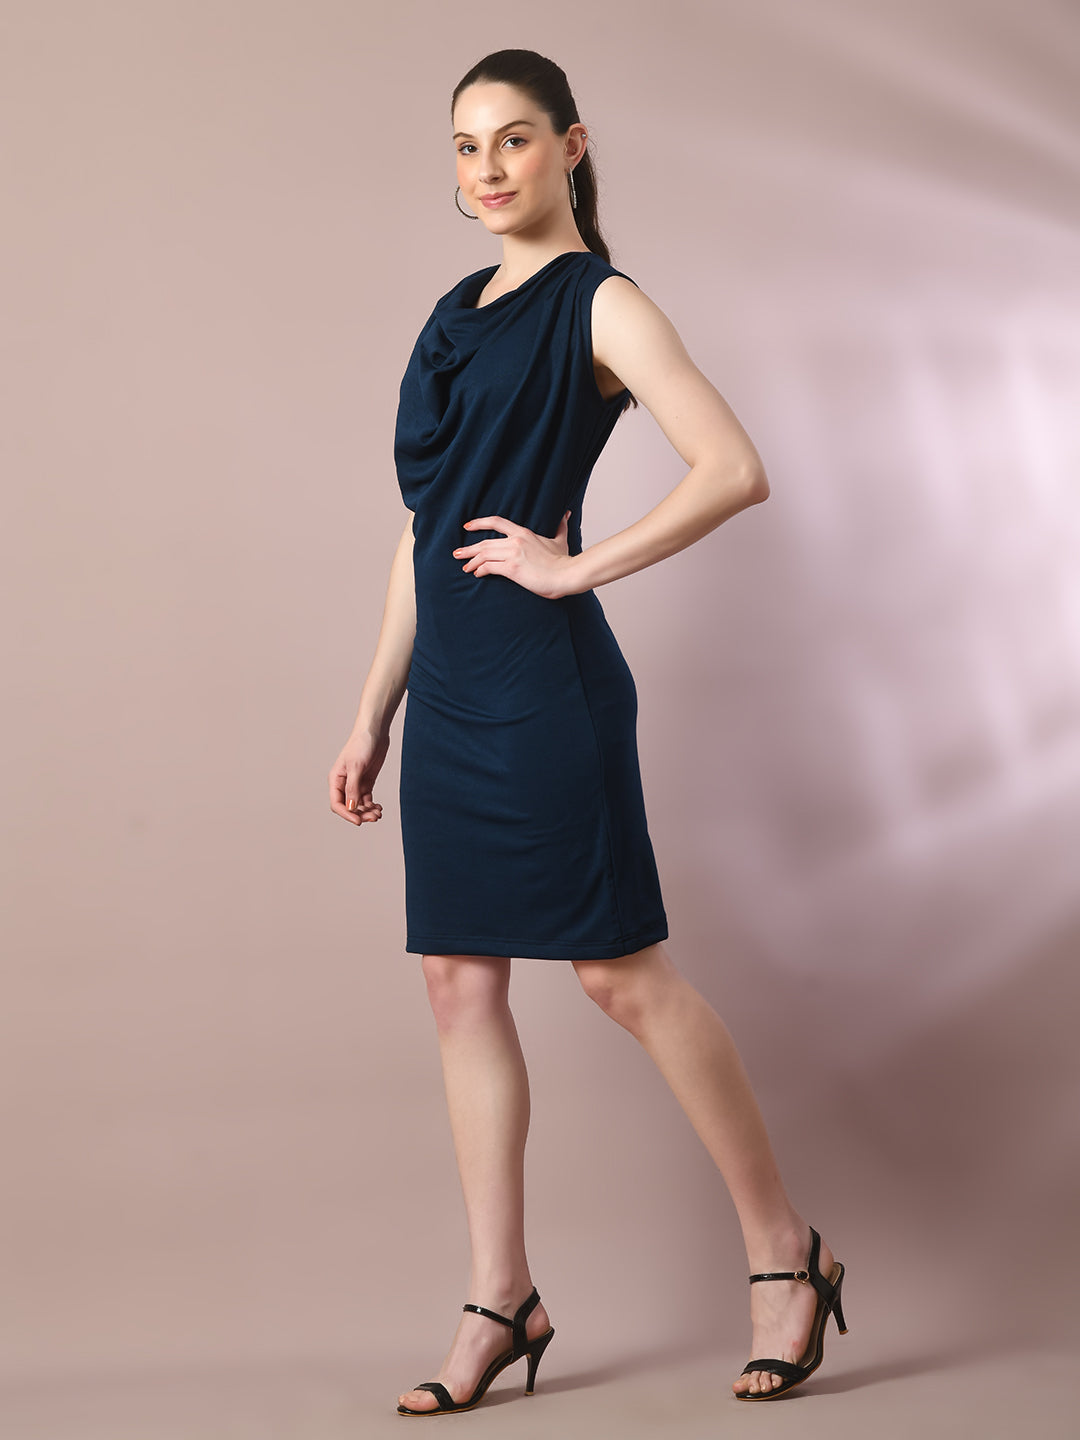 Women's  Navy Blue Solid Cowl Neck Bodycon Party Dress  - Myshka